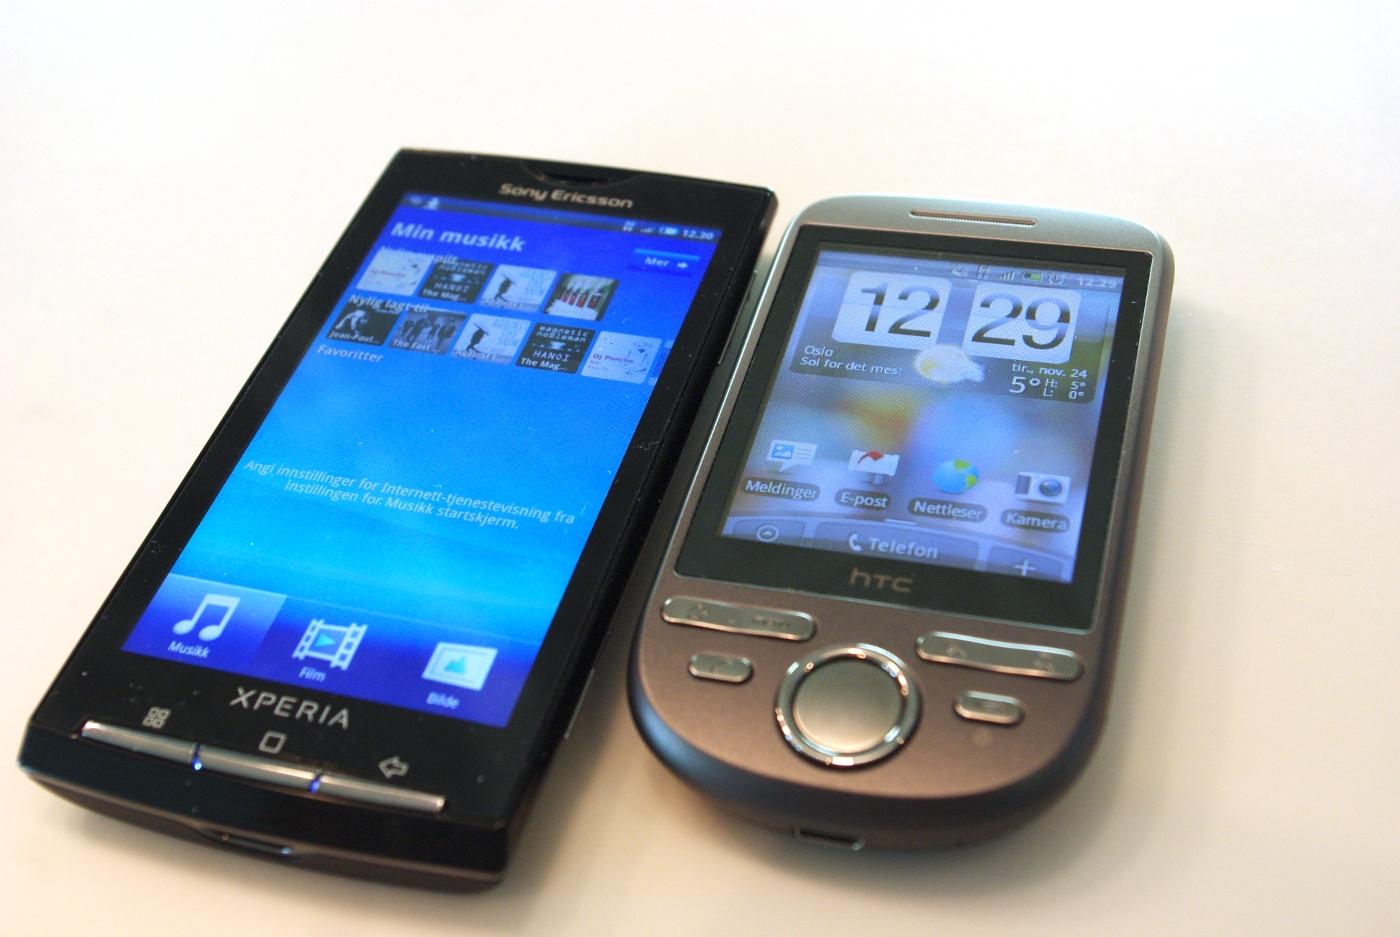 Større enn HTC Tattoo er den, men ikke langt unna Iphone.